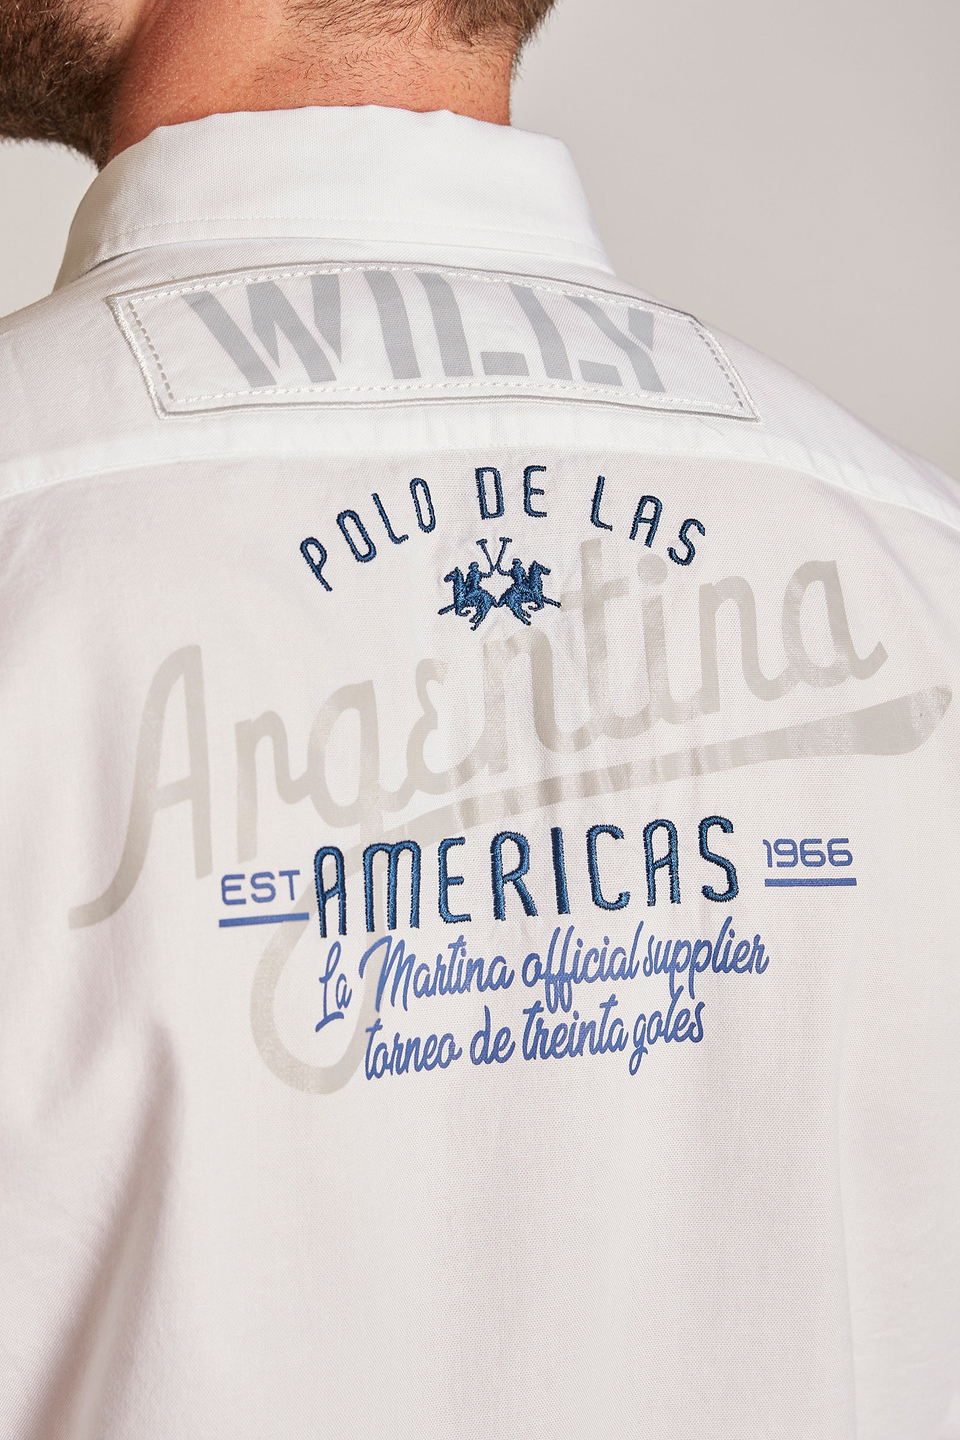 Men's regular-fit long-sleeved shirt featuring contrasting embroidered detail | La Martina - Official Online Shop